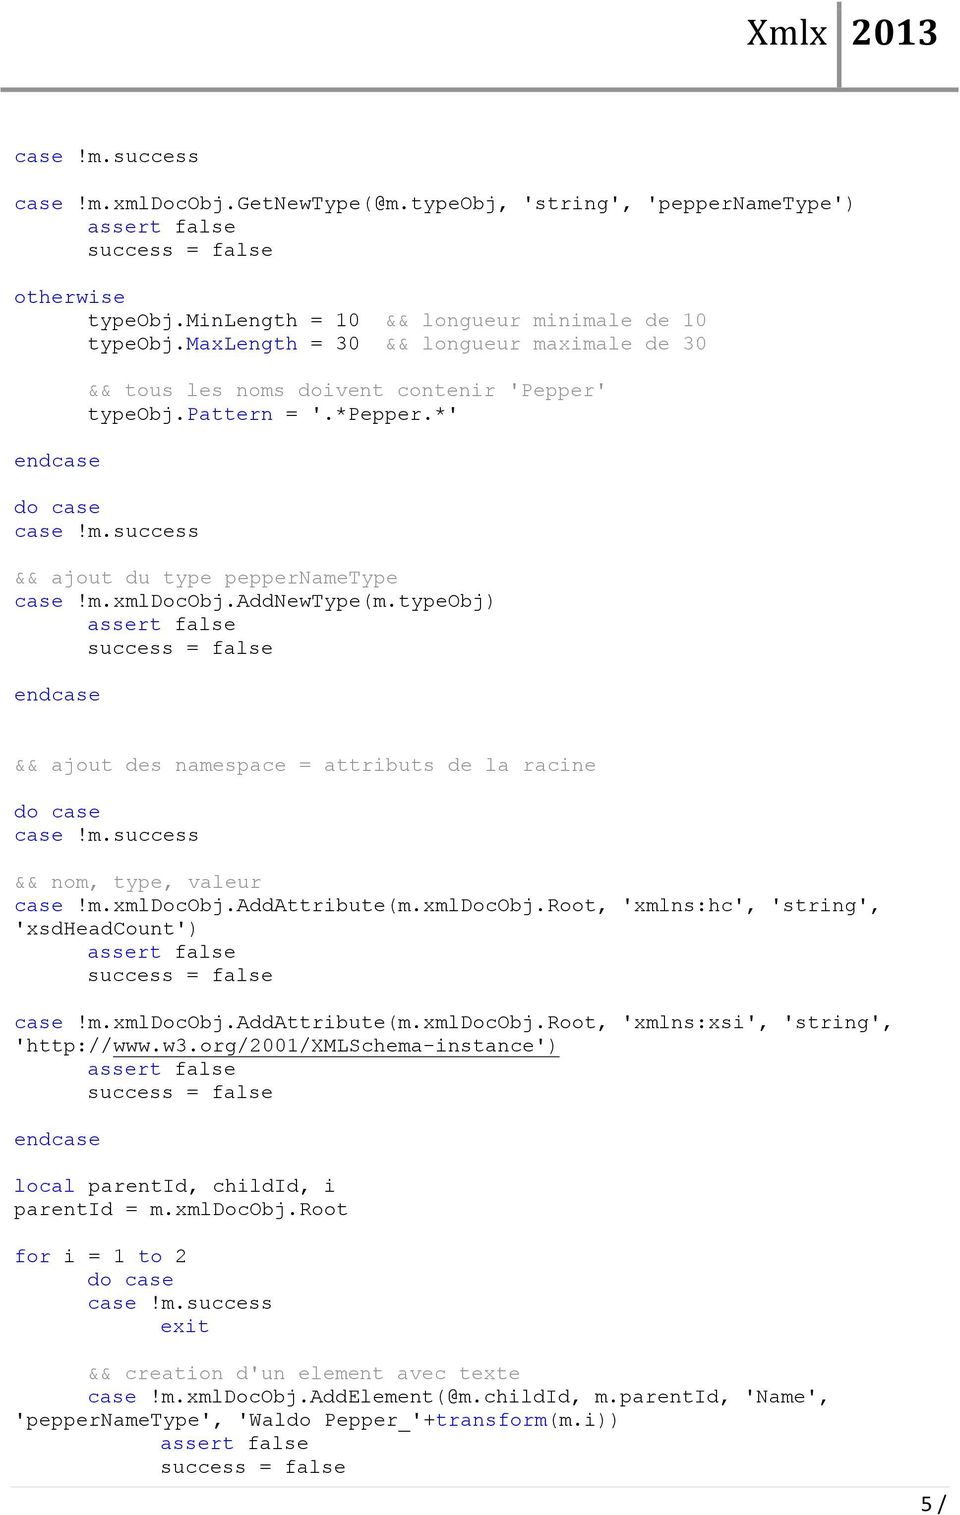 typeobj) && ajut des namespace = attributs de la racine d case && nm, type, valeur case!m.xmldcobj.addattribute(m.xmldcobj.rt, 'xmlns:hc', 'string', 'xsdheadcunt') case!m.xmldcobj.addattribute(m.xmldcobj.rt, 'xmlns:xsi', 'string', 'http://www.